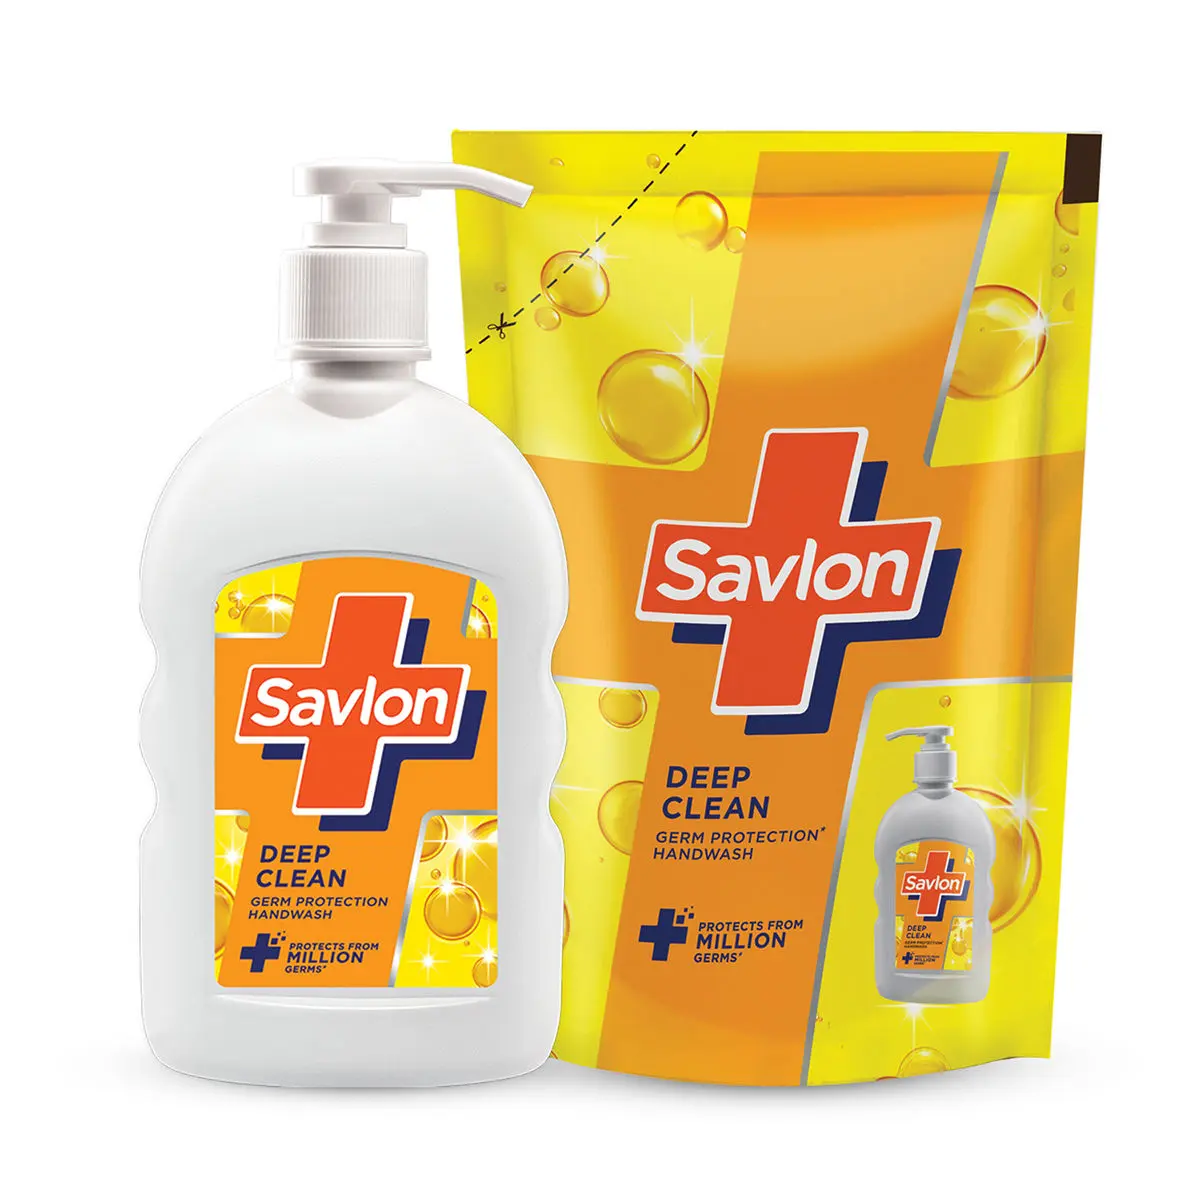 Savlon Deep Clean Germ Protection Liquid Handwash 200ml pump + 175ml refill pouch combo